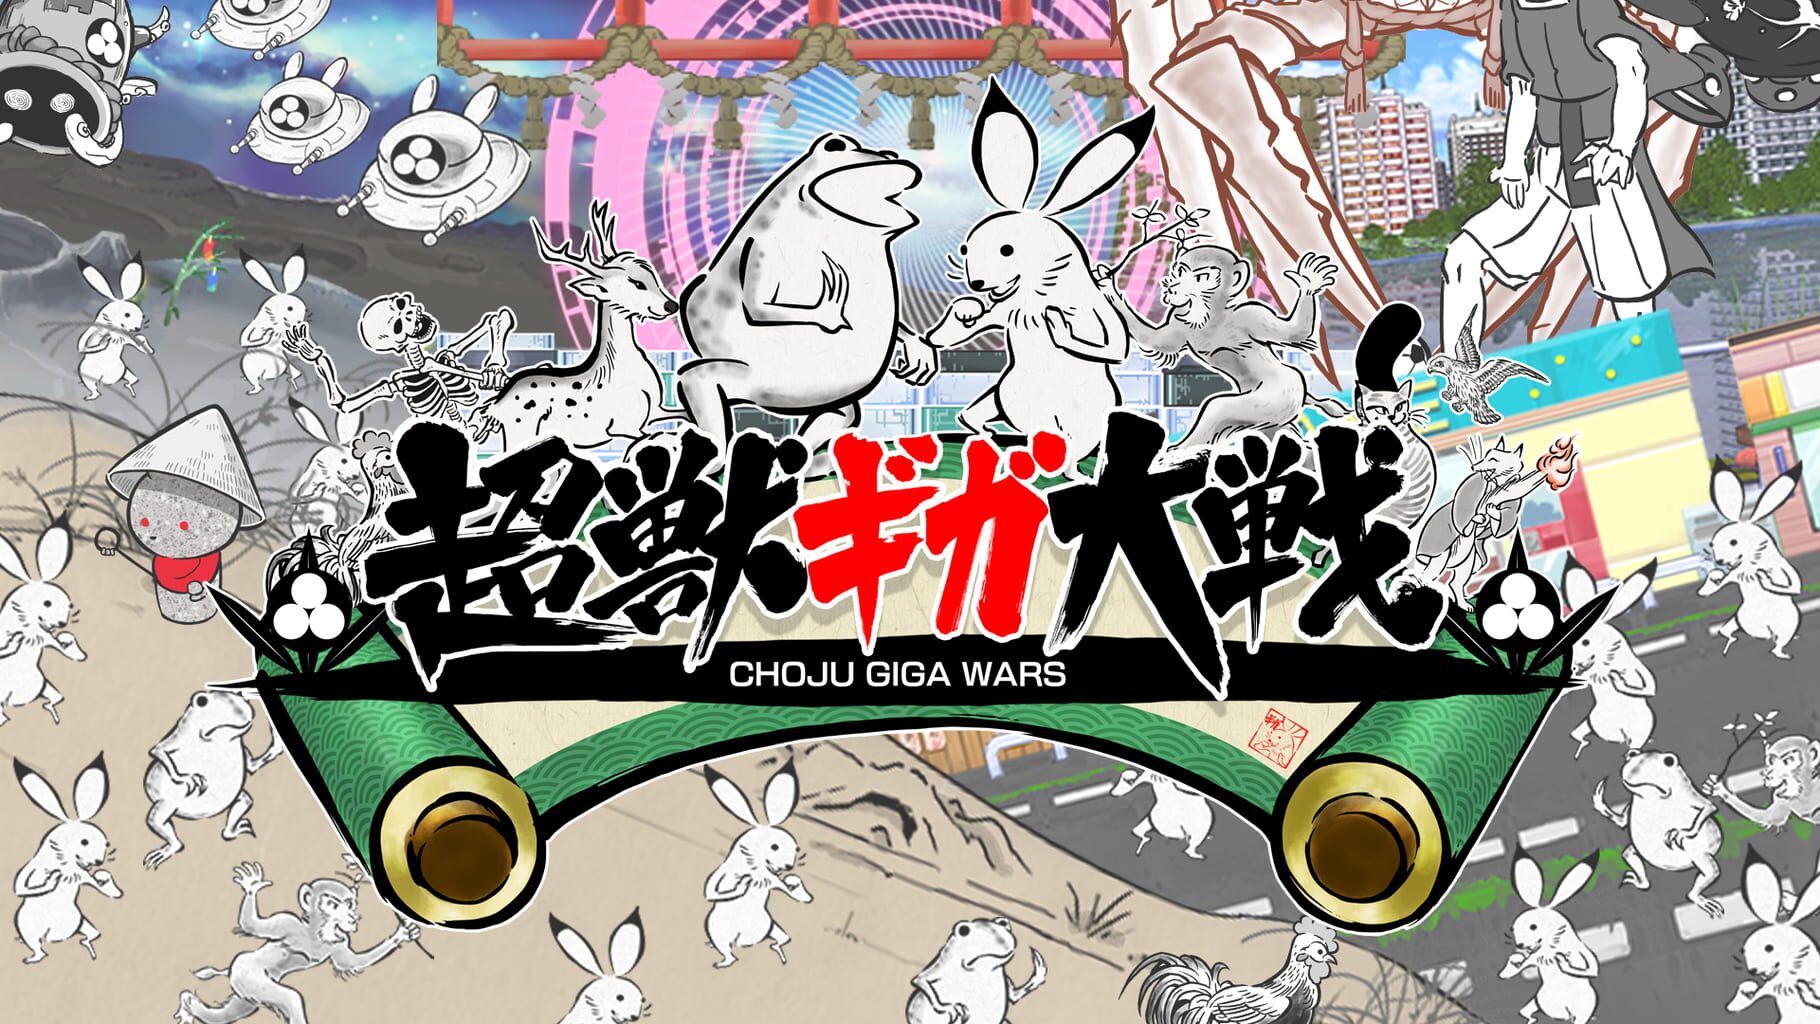 Choju Giga Wars artwork